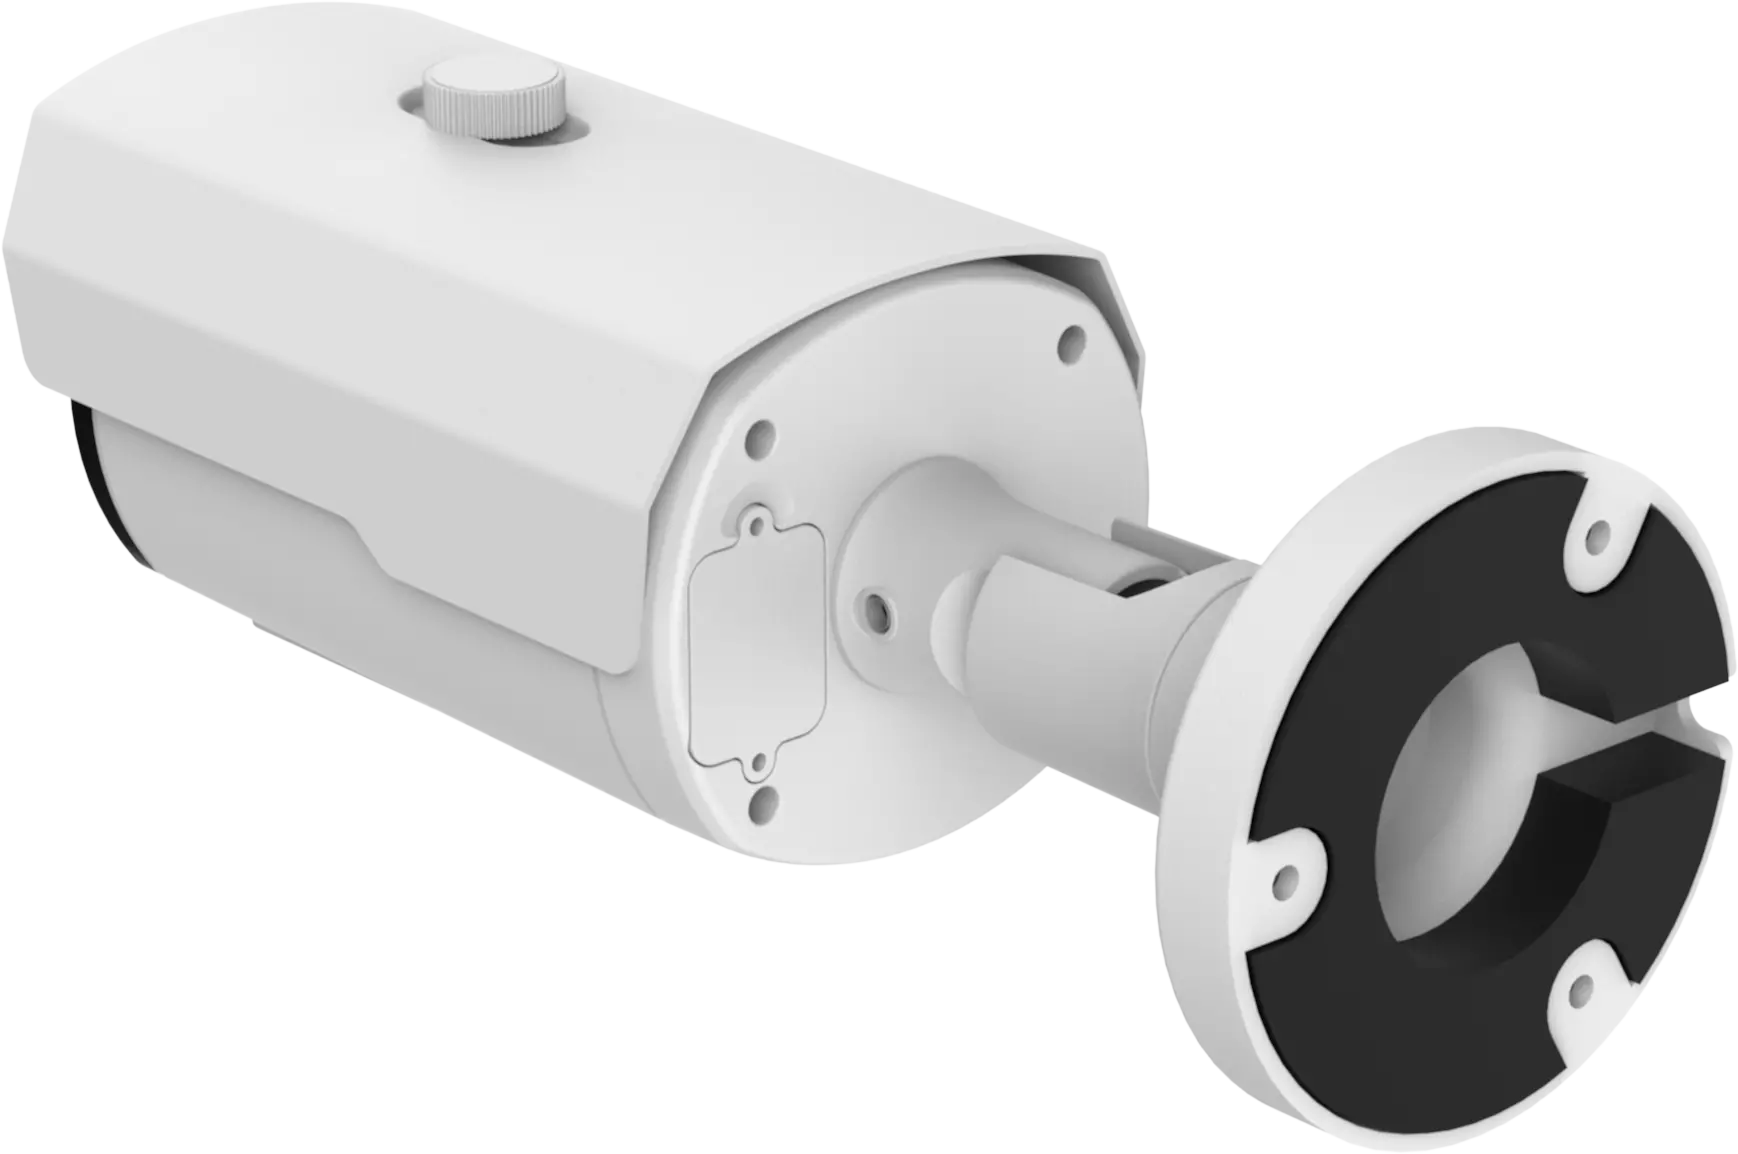 Backstreet Surveillance PROKIT2-120 2 Outdoor Zoom Camera 4K Kit, up to 4 Cameras